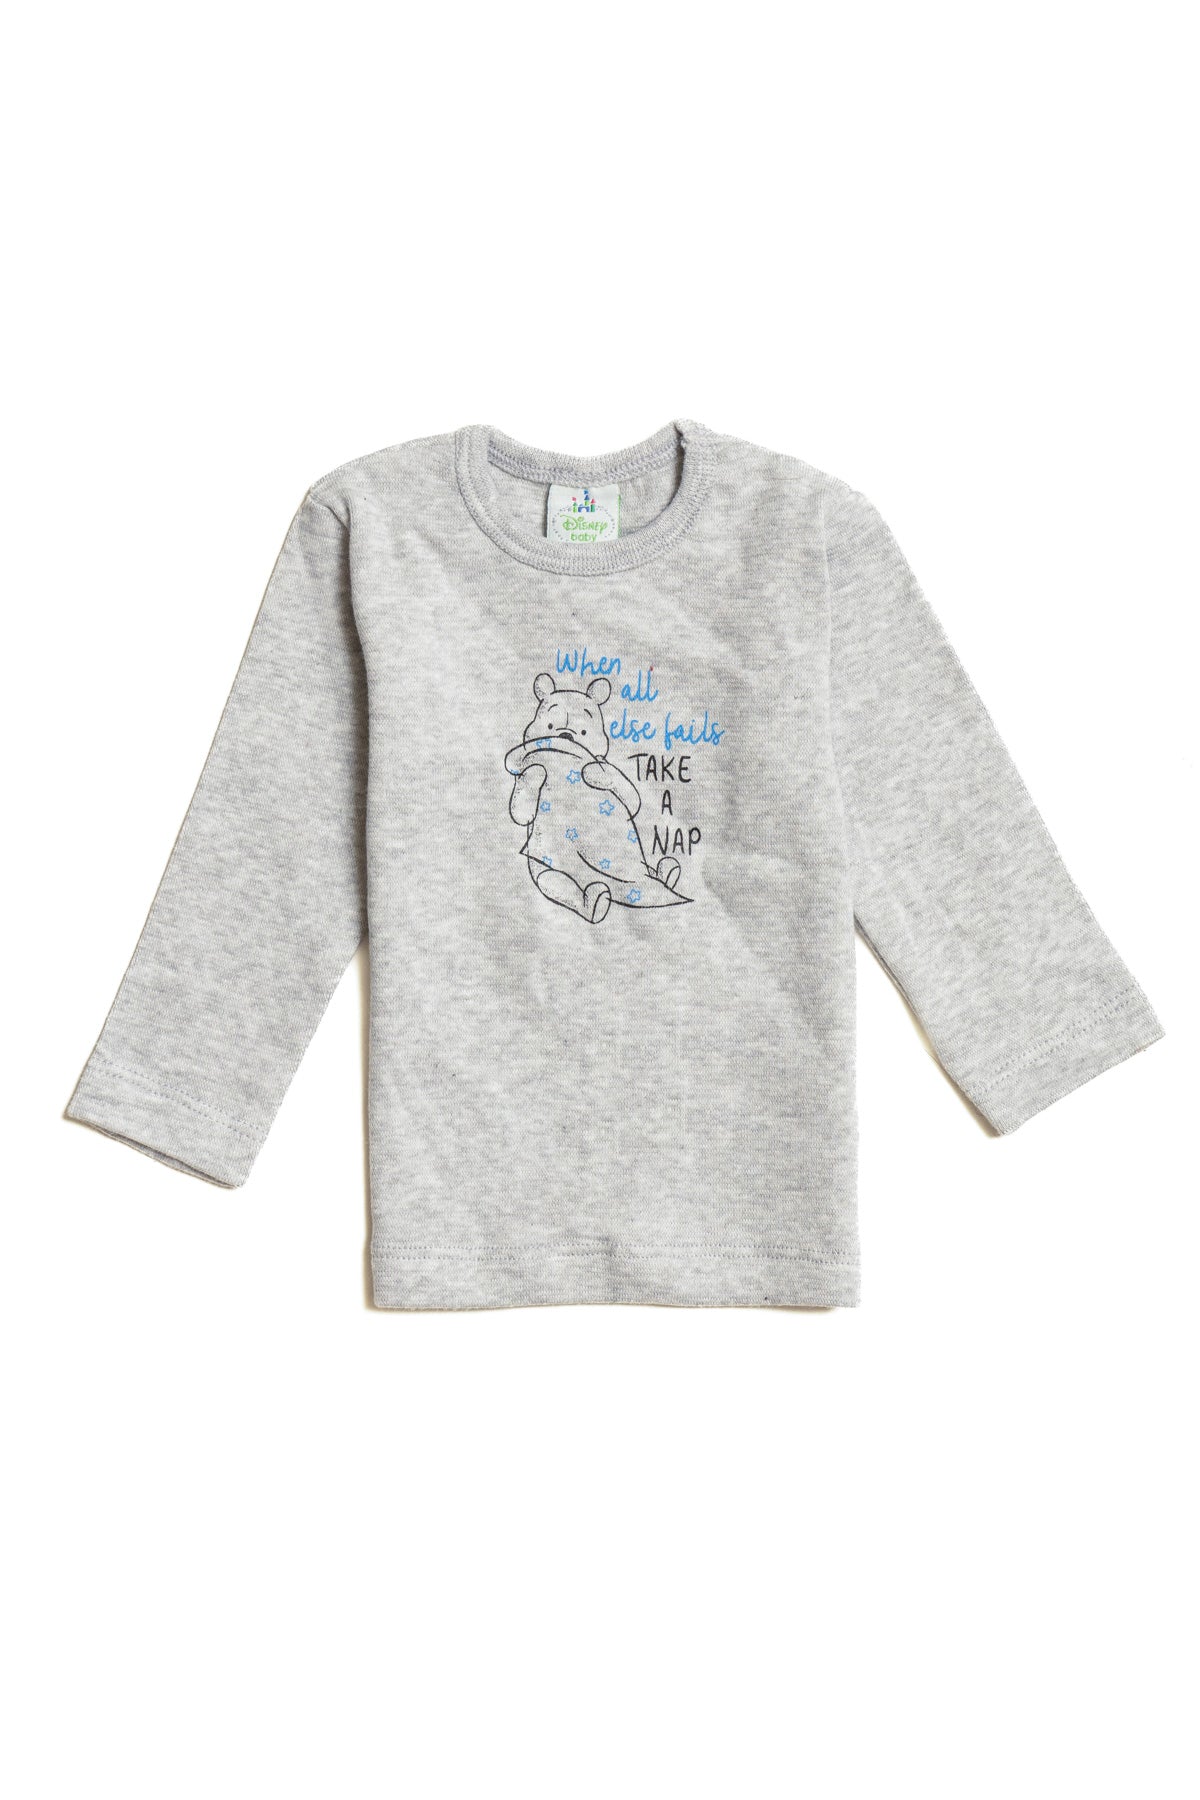 T-Shirt Baby Pooh sleeve 4031